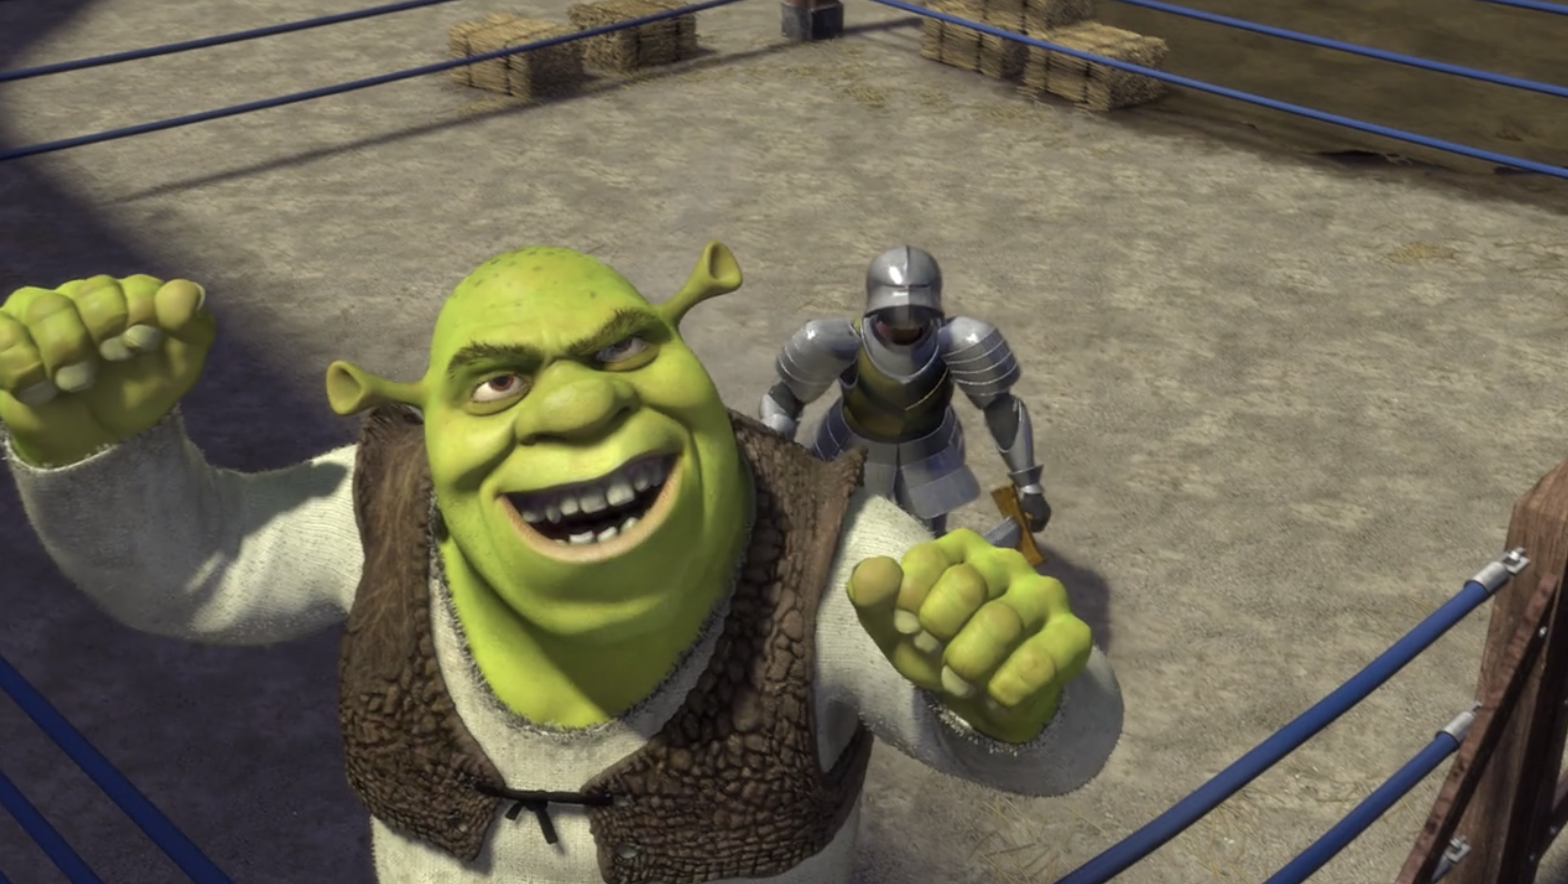 Shrek cheering in the ring 